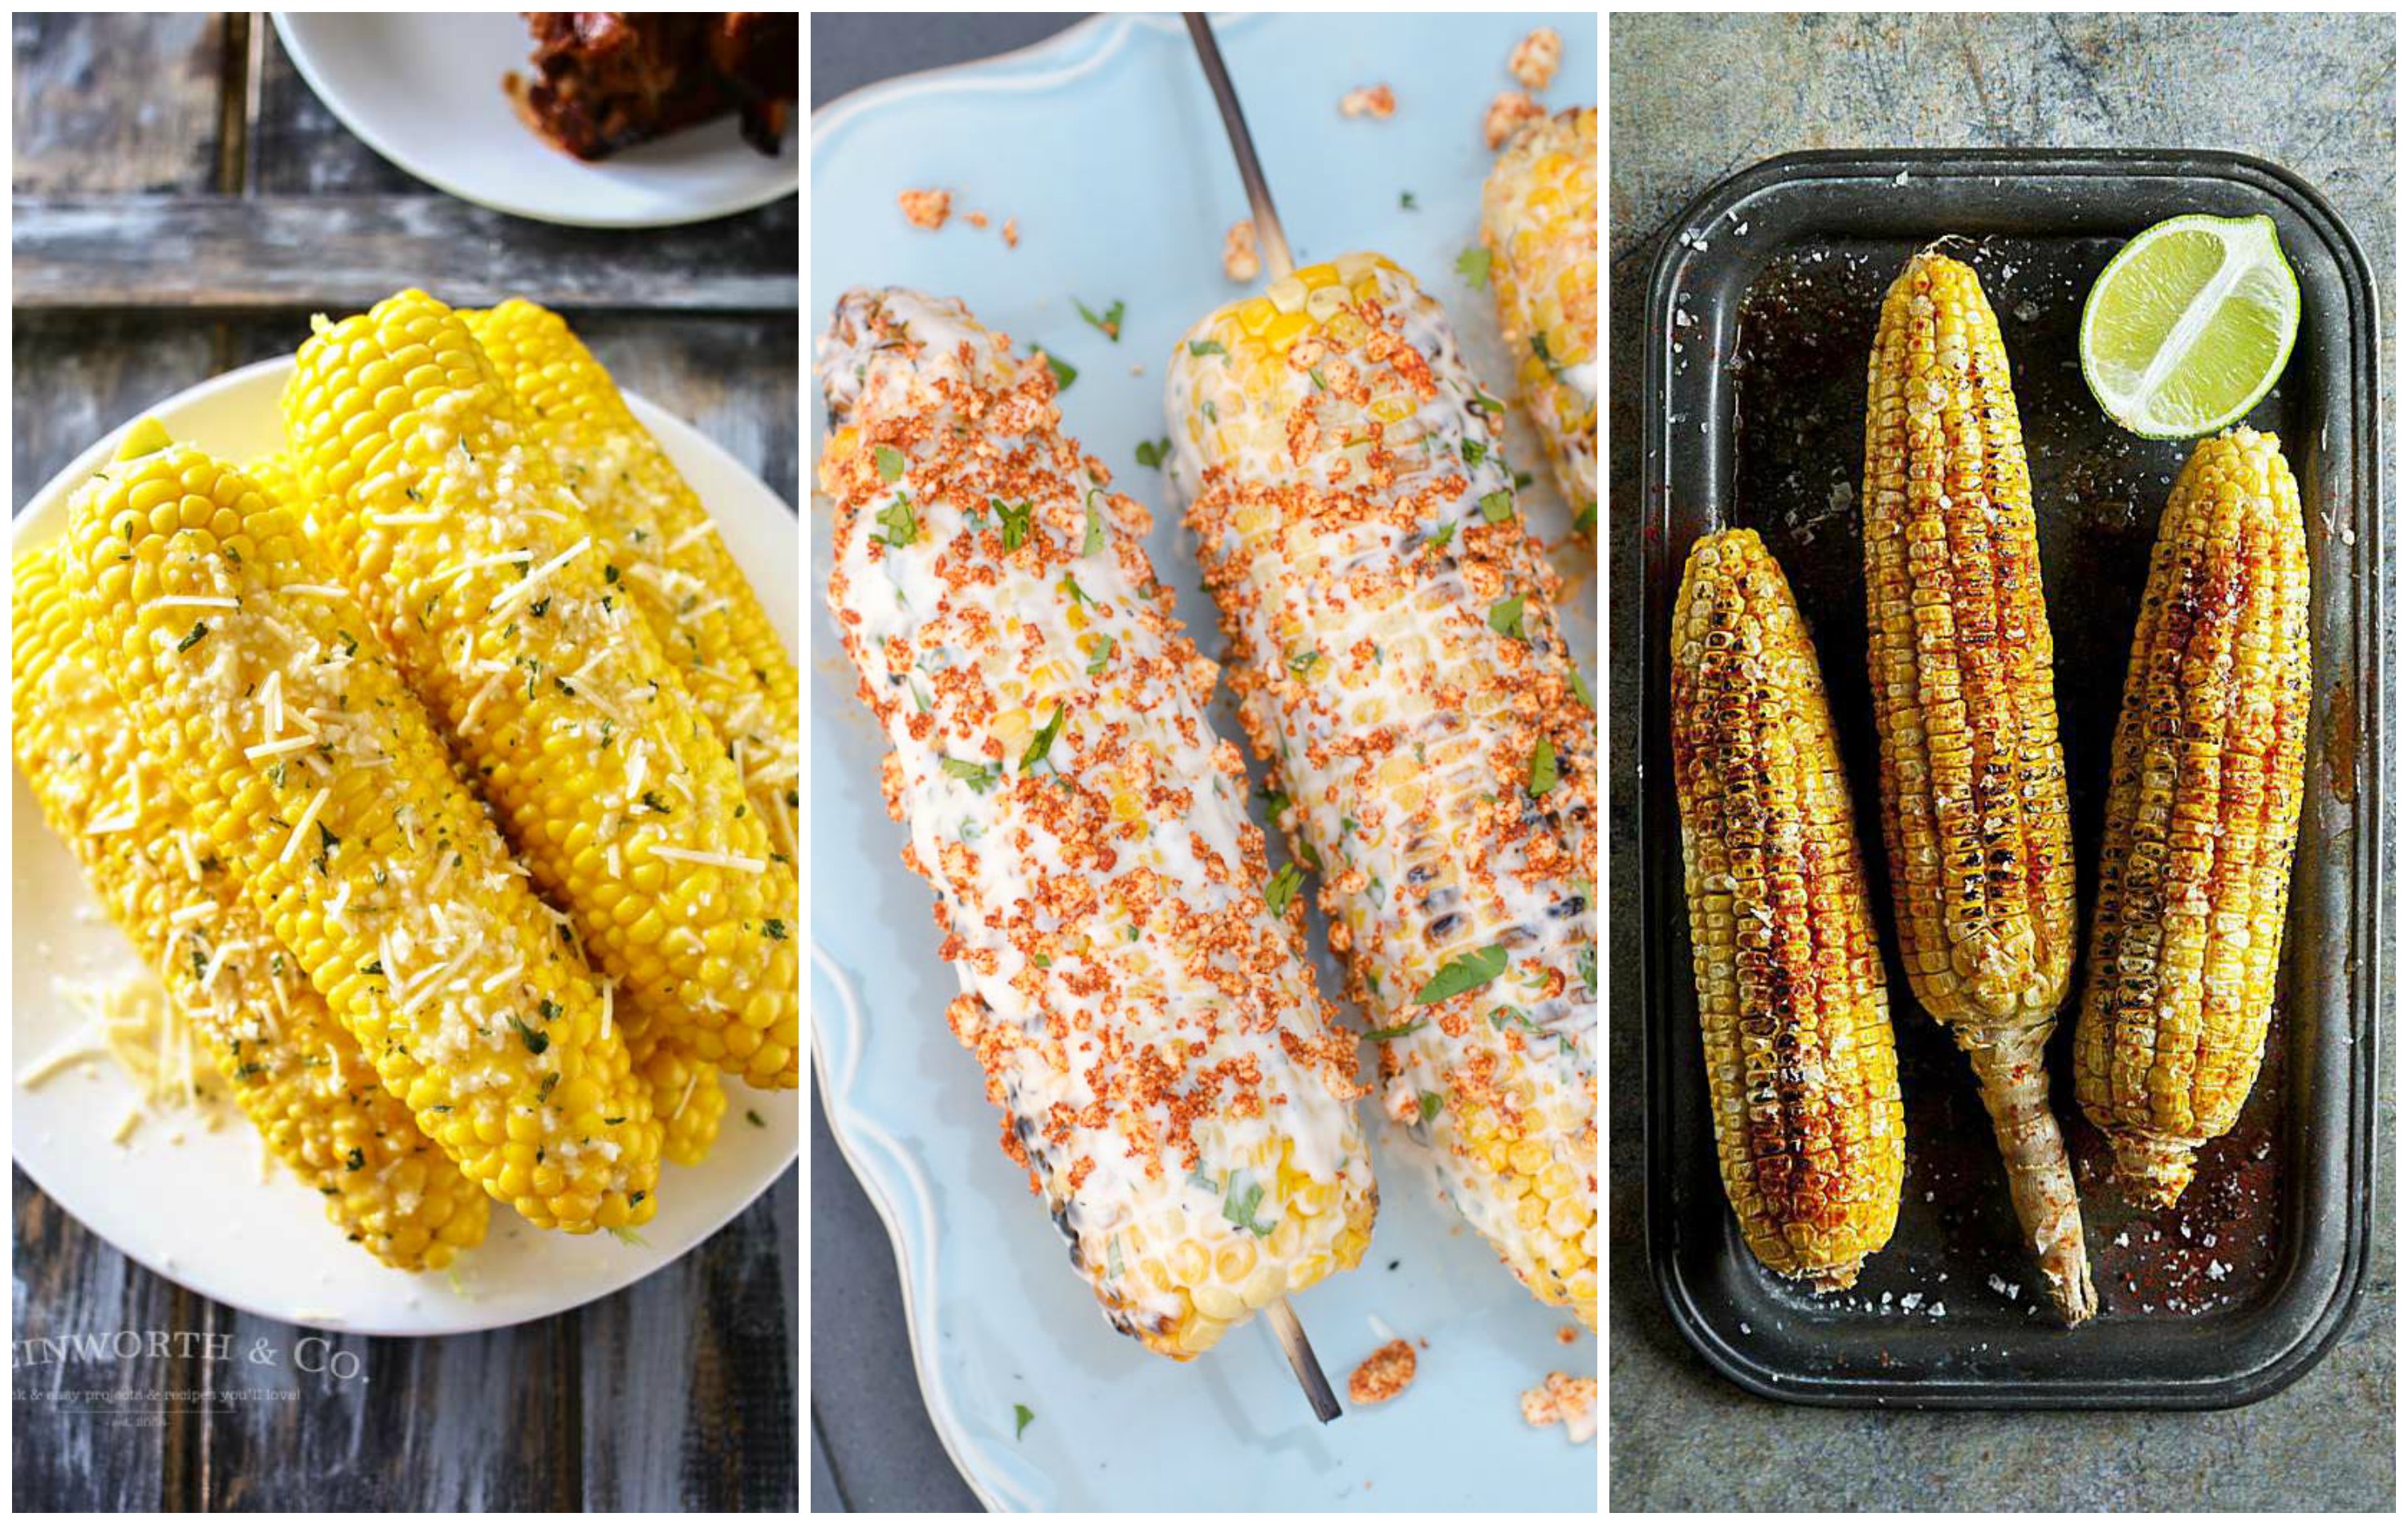 Corn on the Cob Recipes